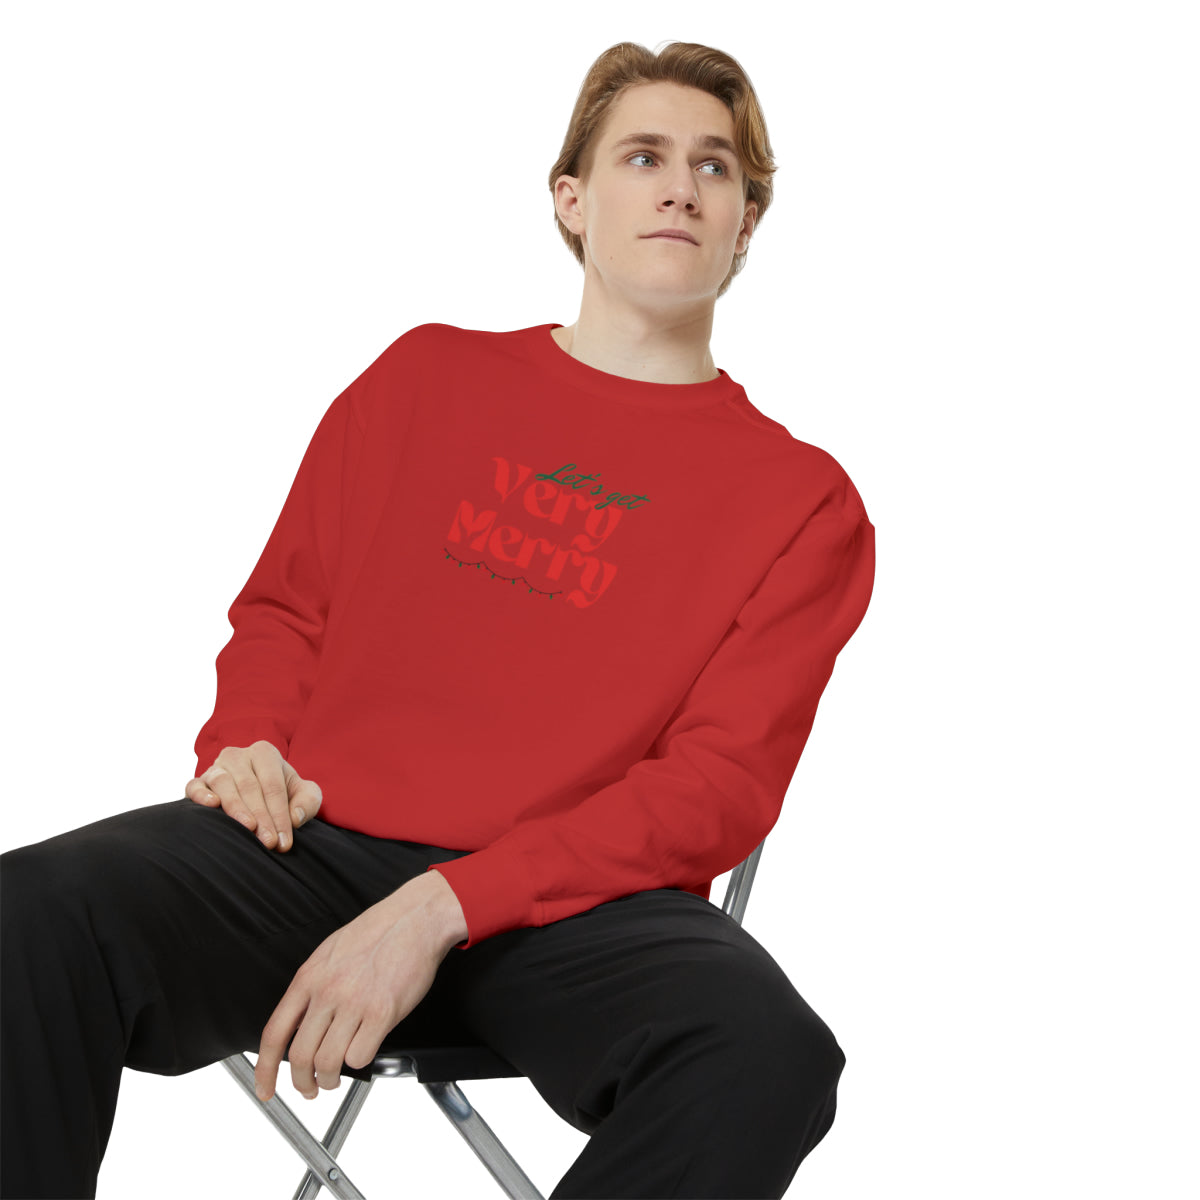 Very Merry Unisex Sweatshirt